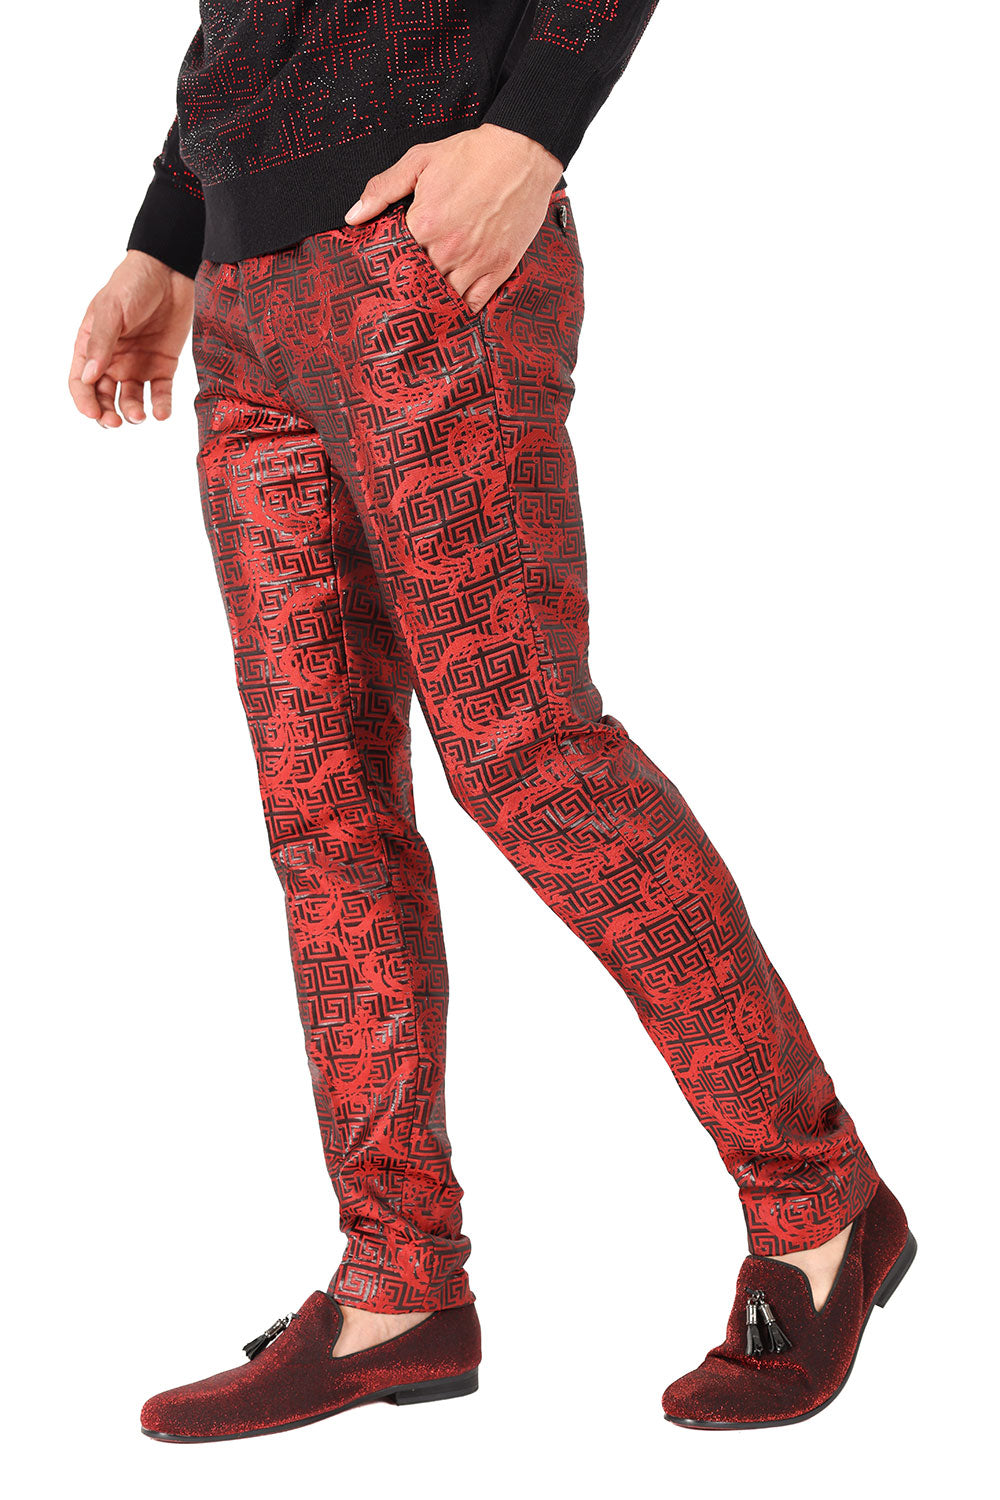 Barabas Men's Shiny Greek Fret Prints Design Chino Pants 2CP3102 Red Black